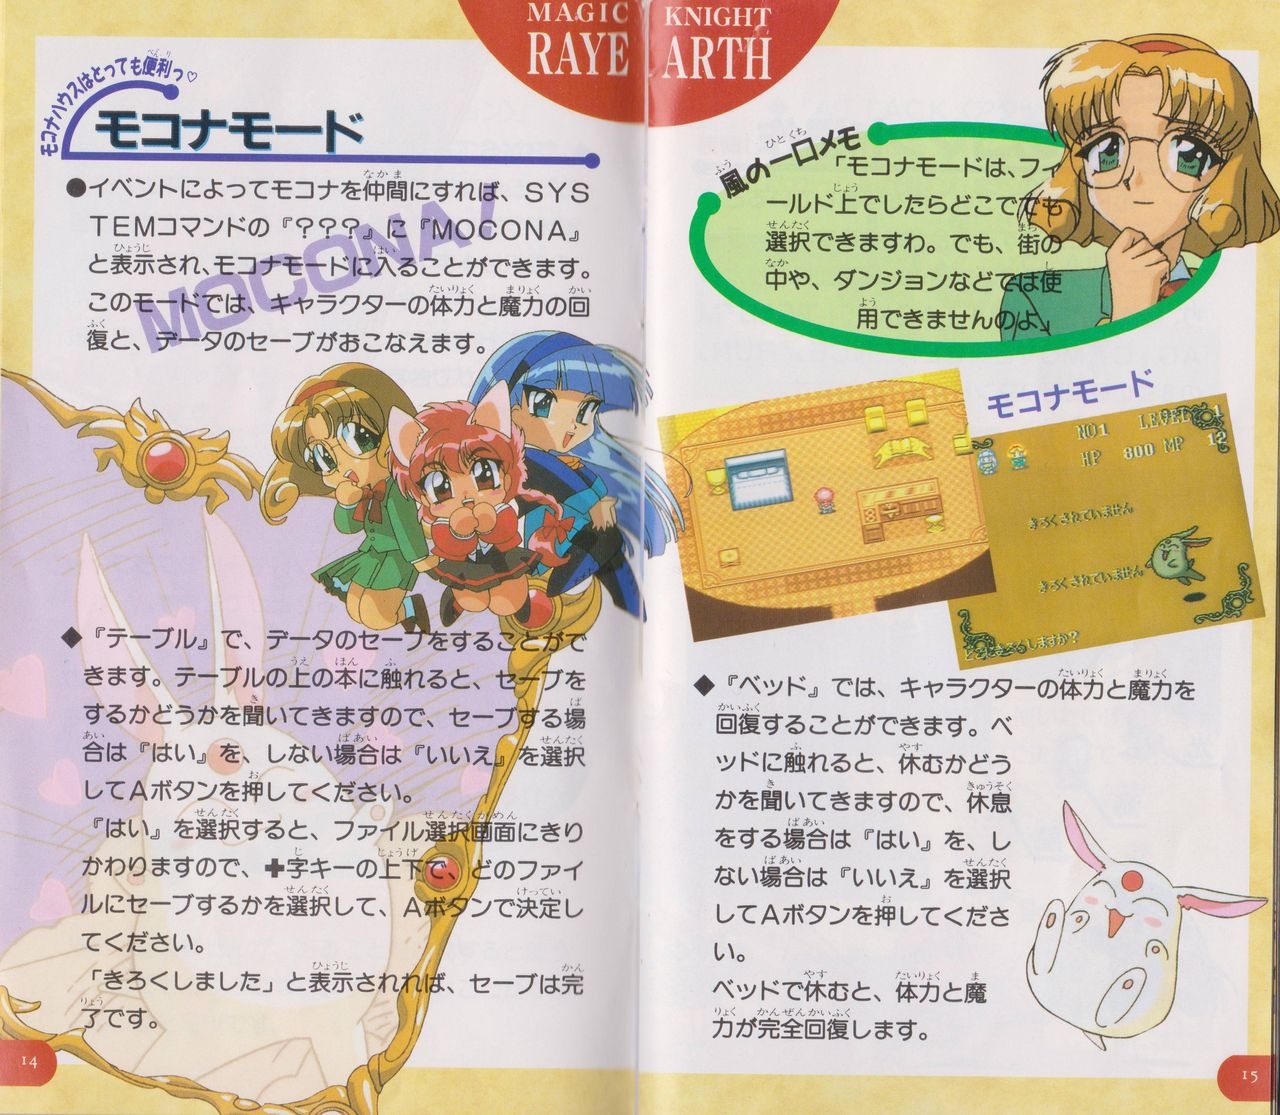 Magic Knight Rayearth - Box & Manual Scans [Super Famicom] 10